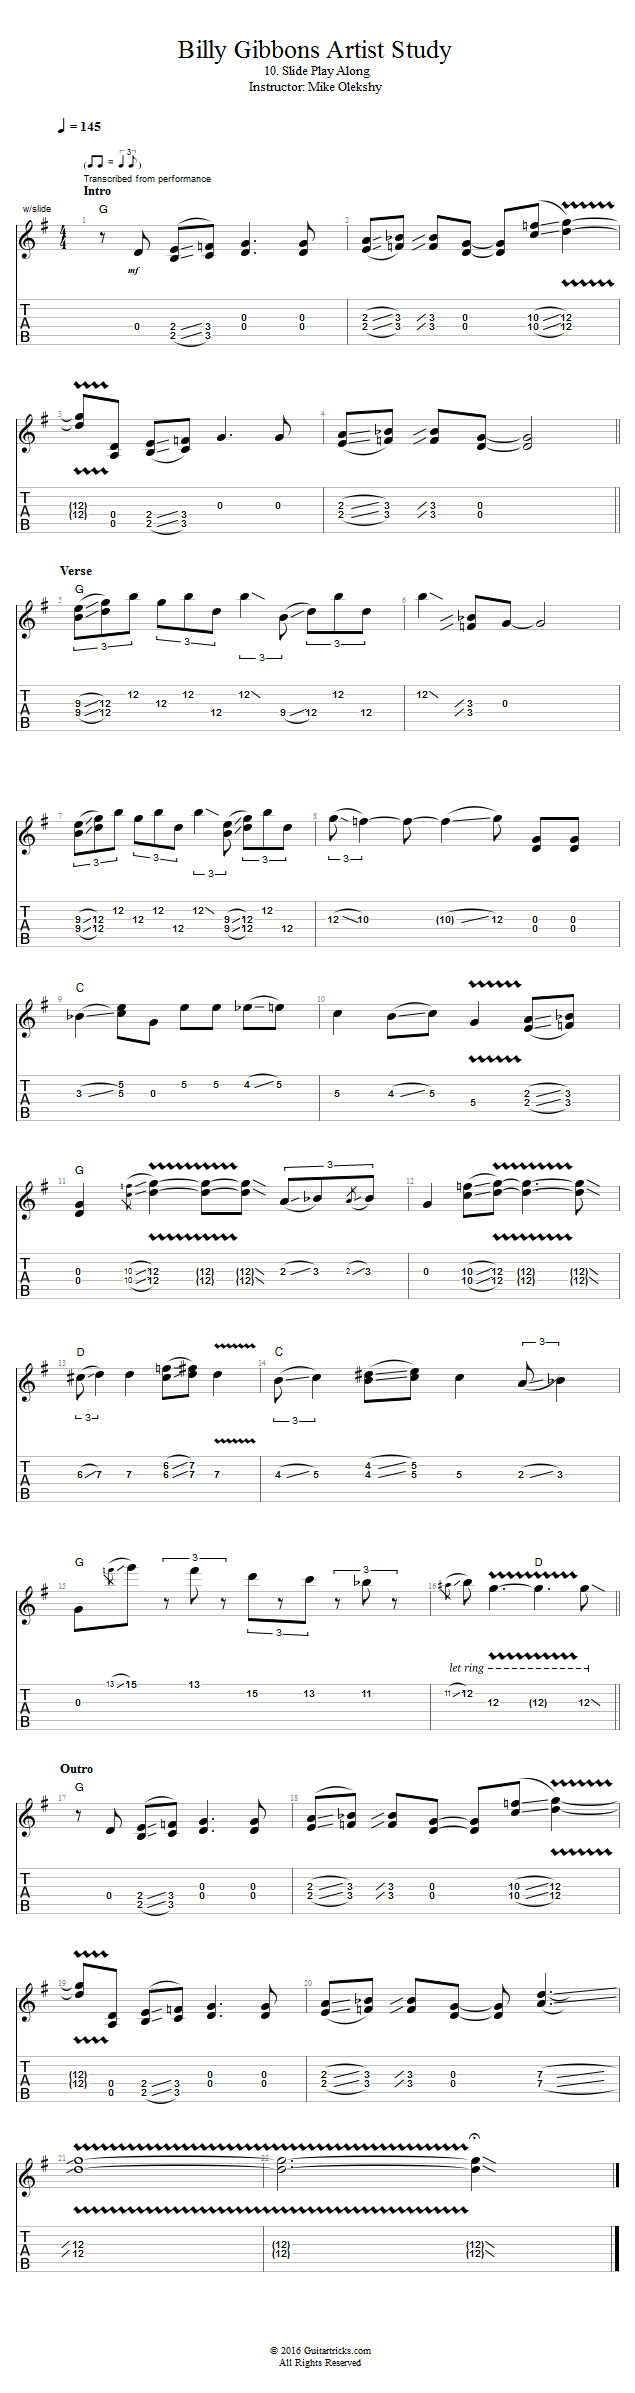 Slide Play Along song notation